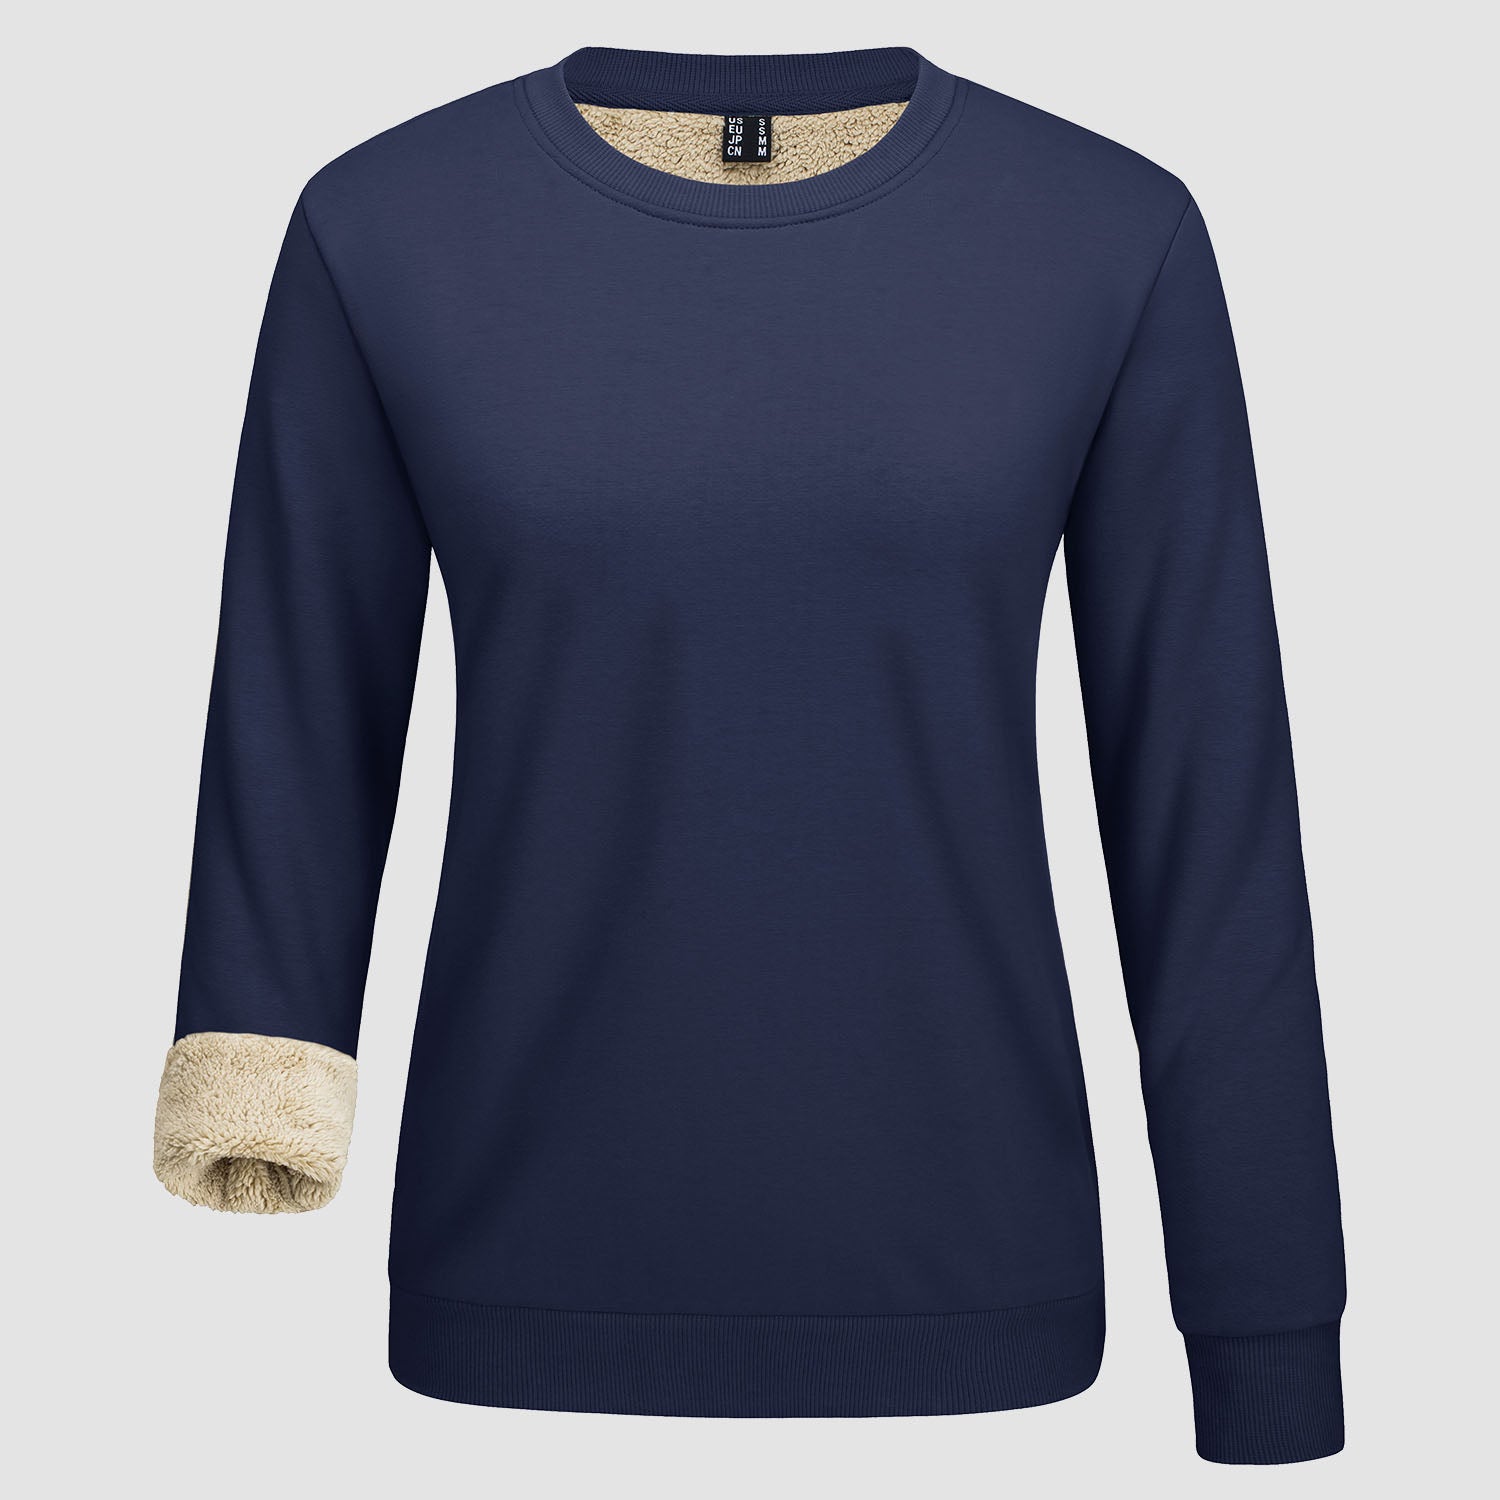 Women's Fleece Lined Sweatshirt Pullover Basic Tops Warm Crewneck Winter Sweater Underwear